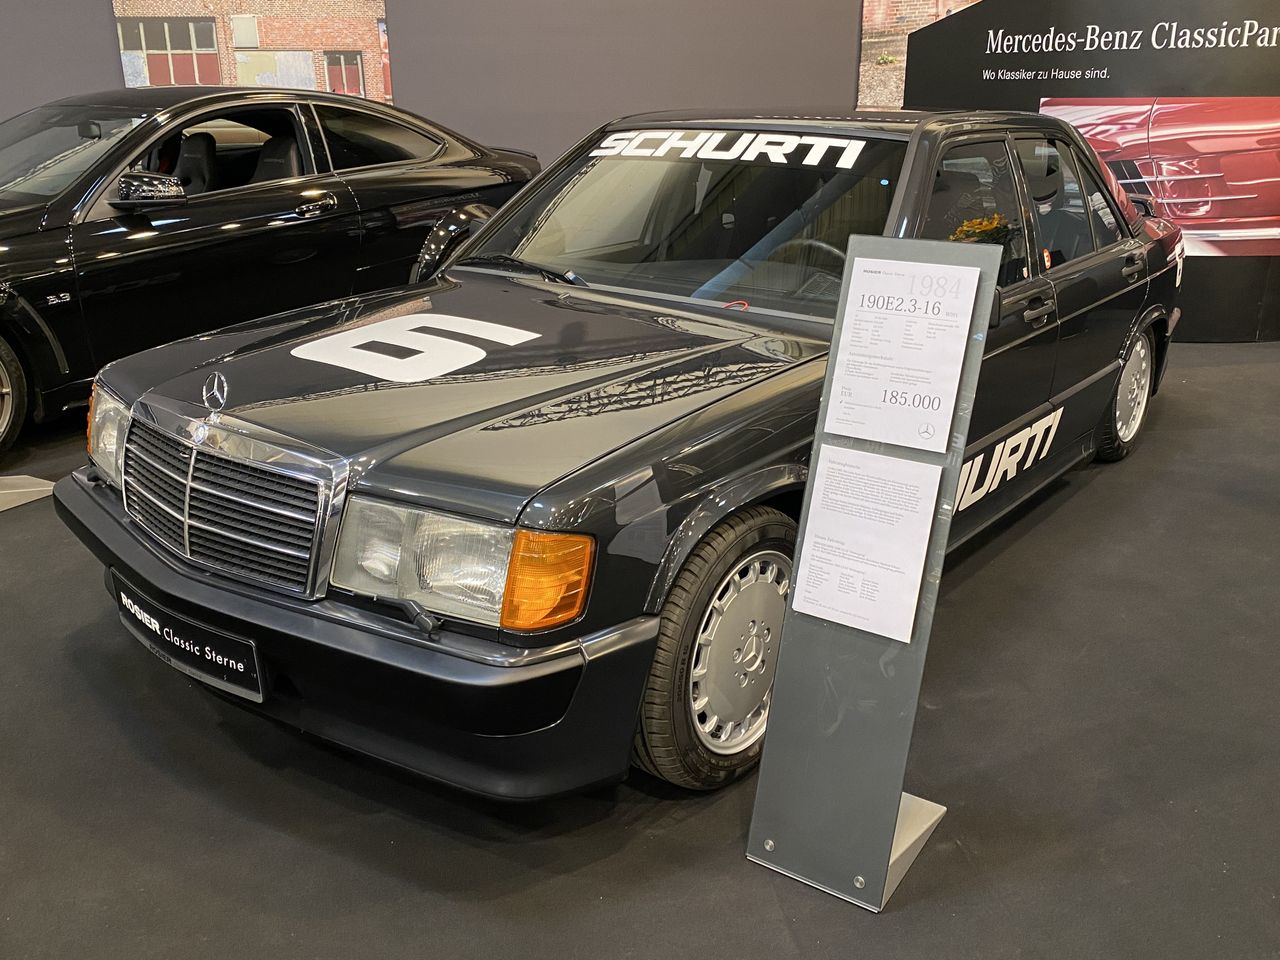 Mercedes 190E 2.3-16 W201 (Race of Champions 1984 – M. Schurti)